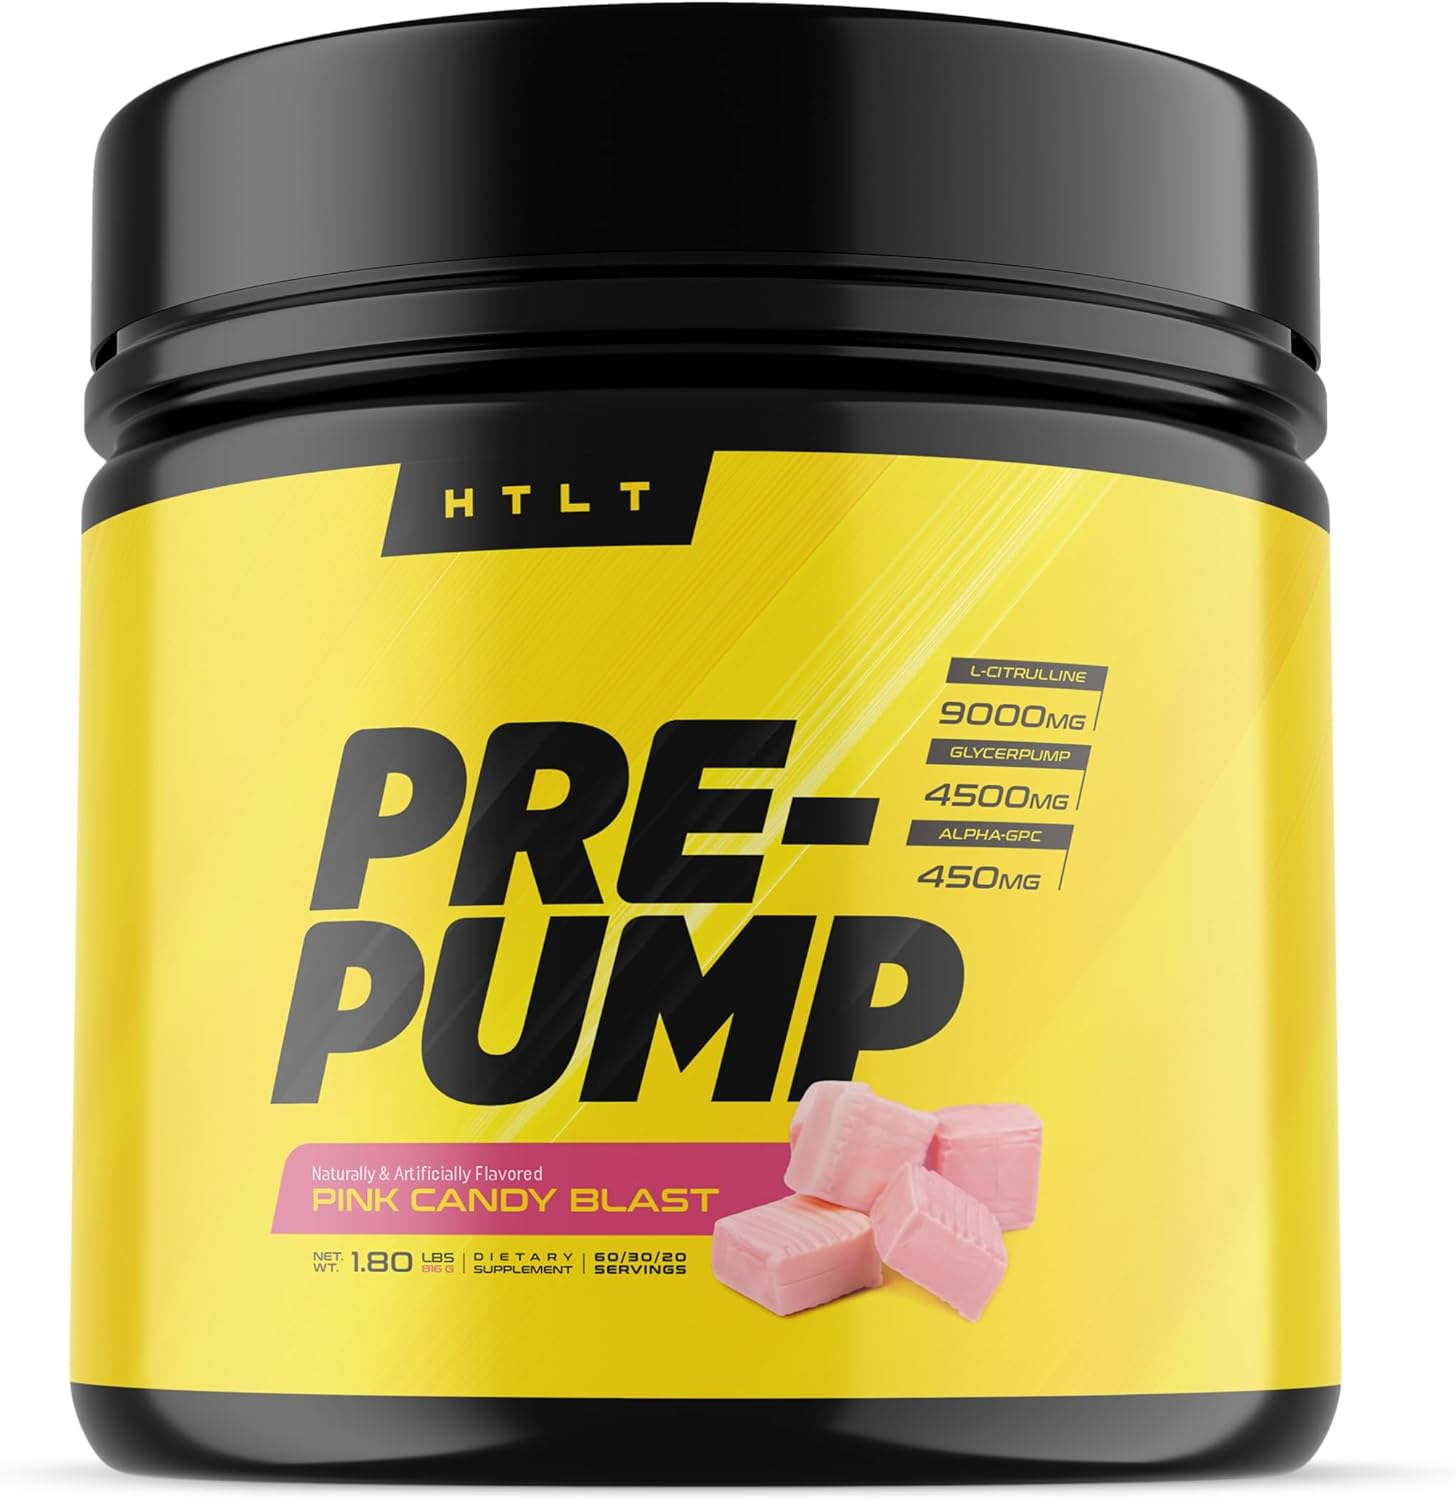 HTLT Pre-Pump Pre-Workout (Pink Candy Blast)